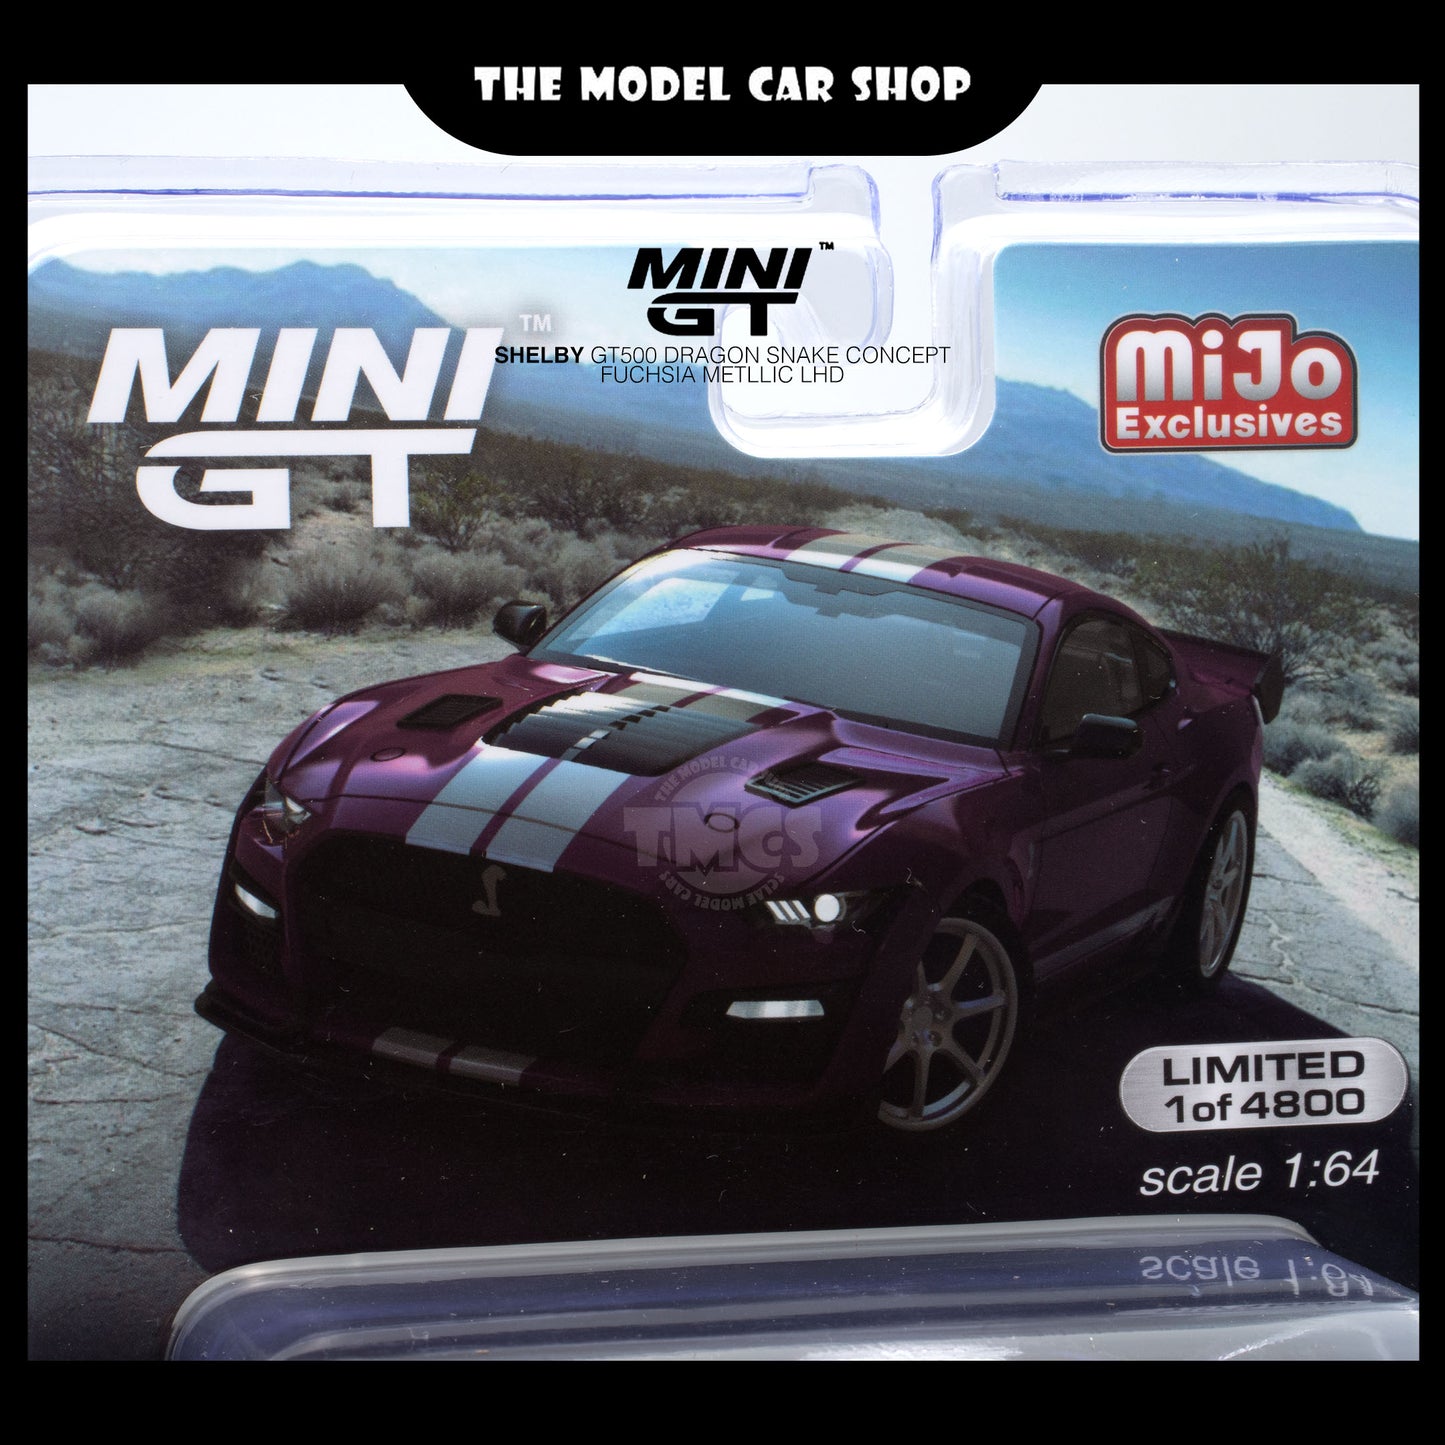 [MINI GT] Shelby GT500 Dragon Snake Concept - Fuchsia Metallic (Mijo Exclusive)